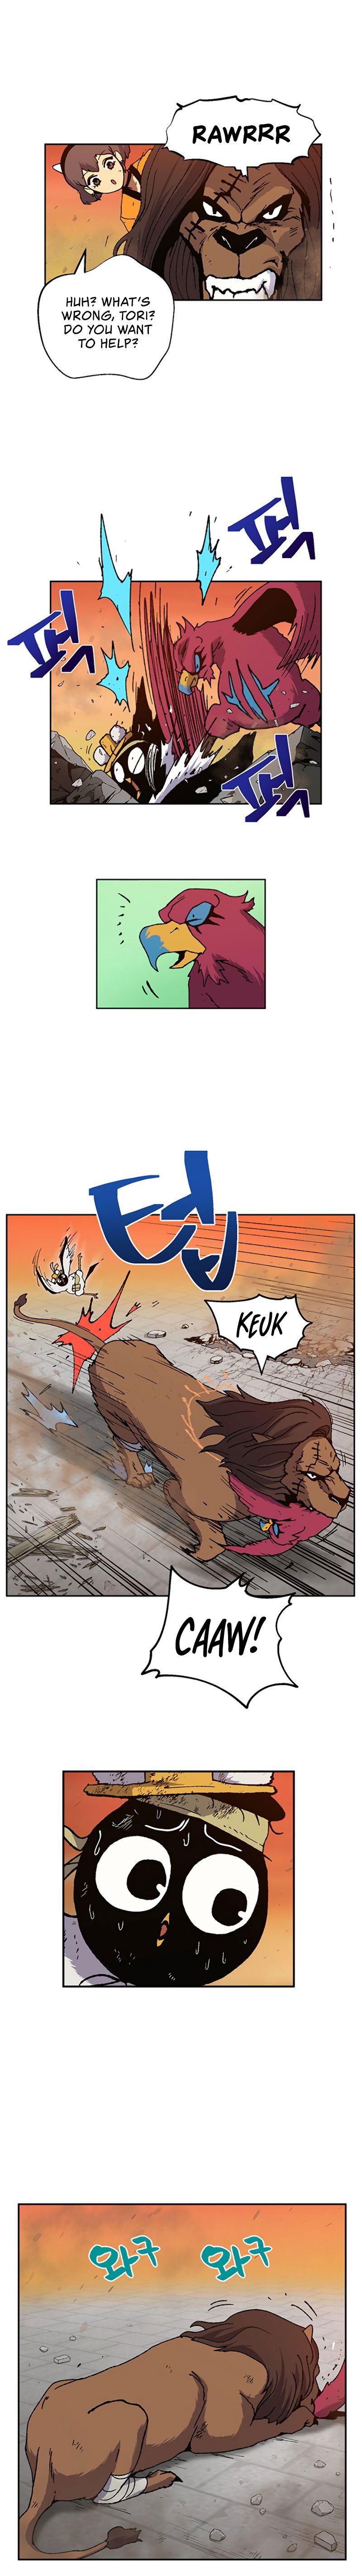 Taebaek: The Tutorial Man Chapter 8 page 10